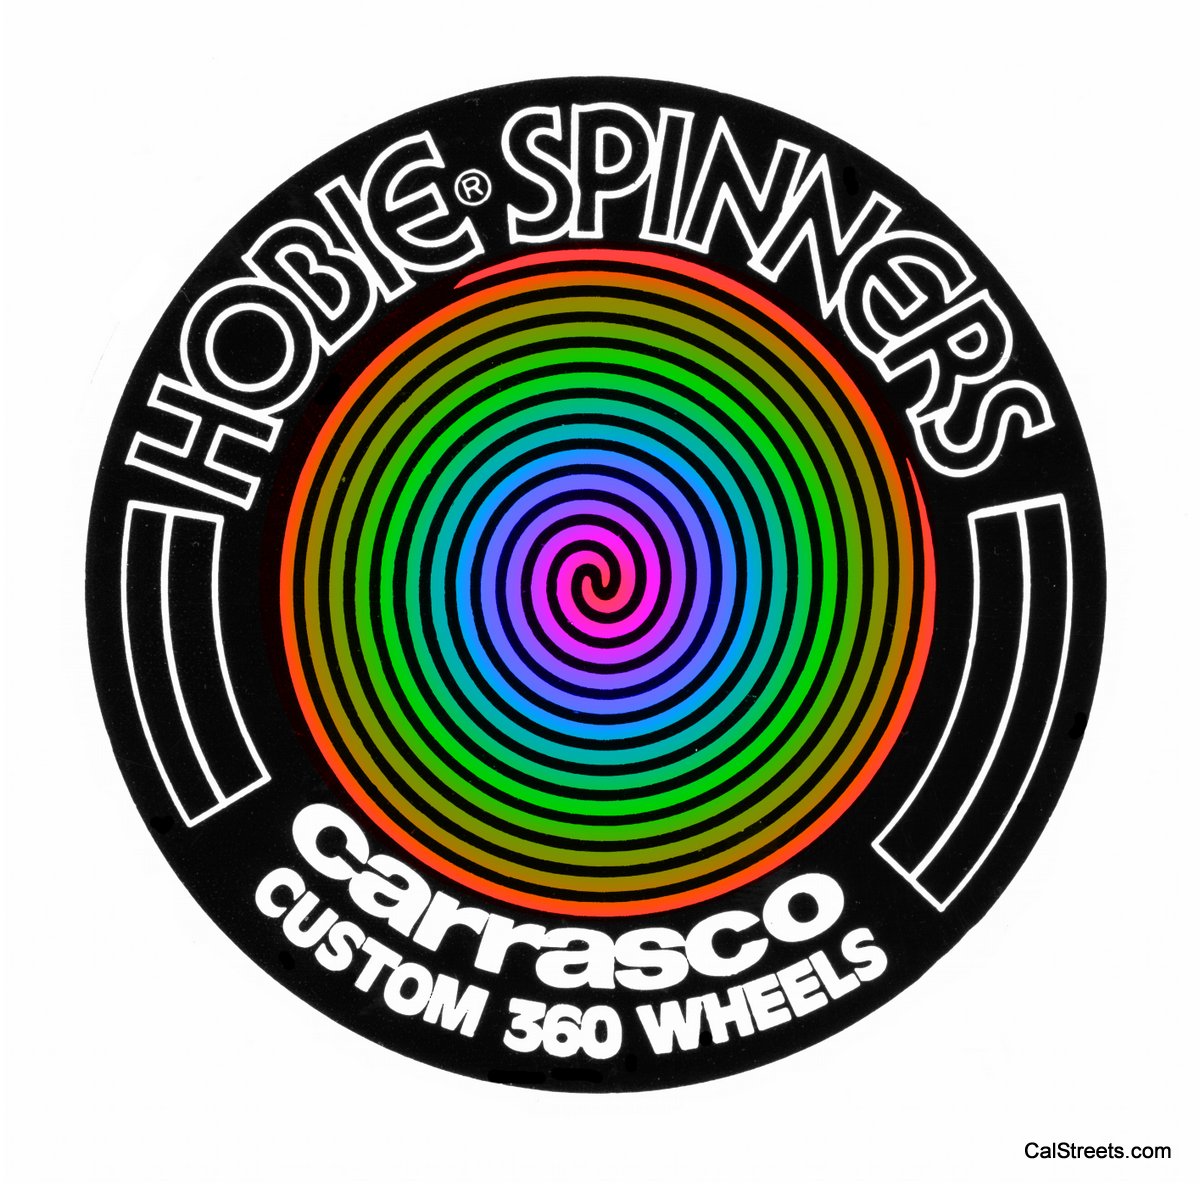 Hobie-Spinners-Carrasco-Custom-360-Wheels-RFX-F1.jpg